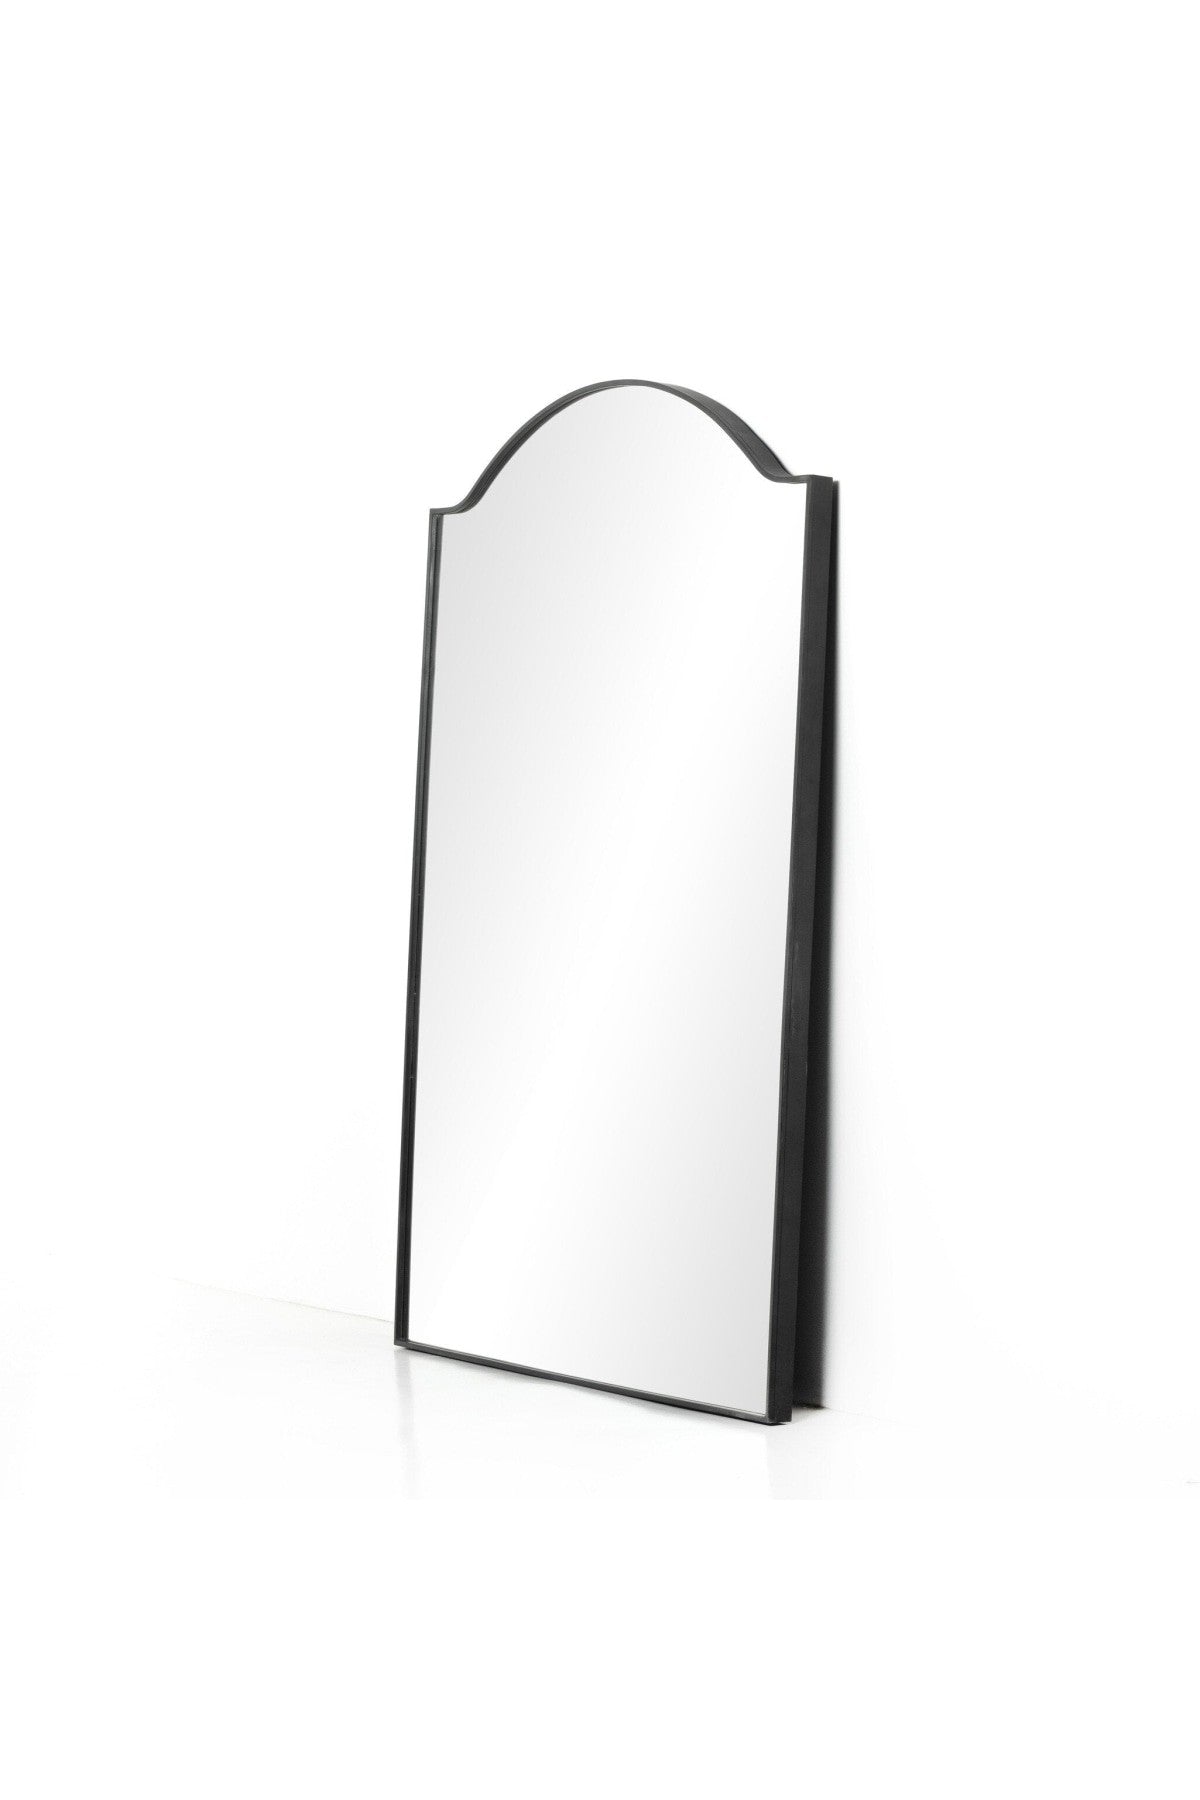 Octavia Floor Mirror- 2 Styles - THELIFESTYLEDCO Shop